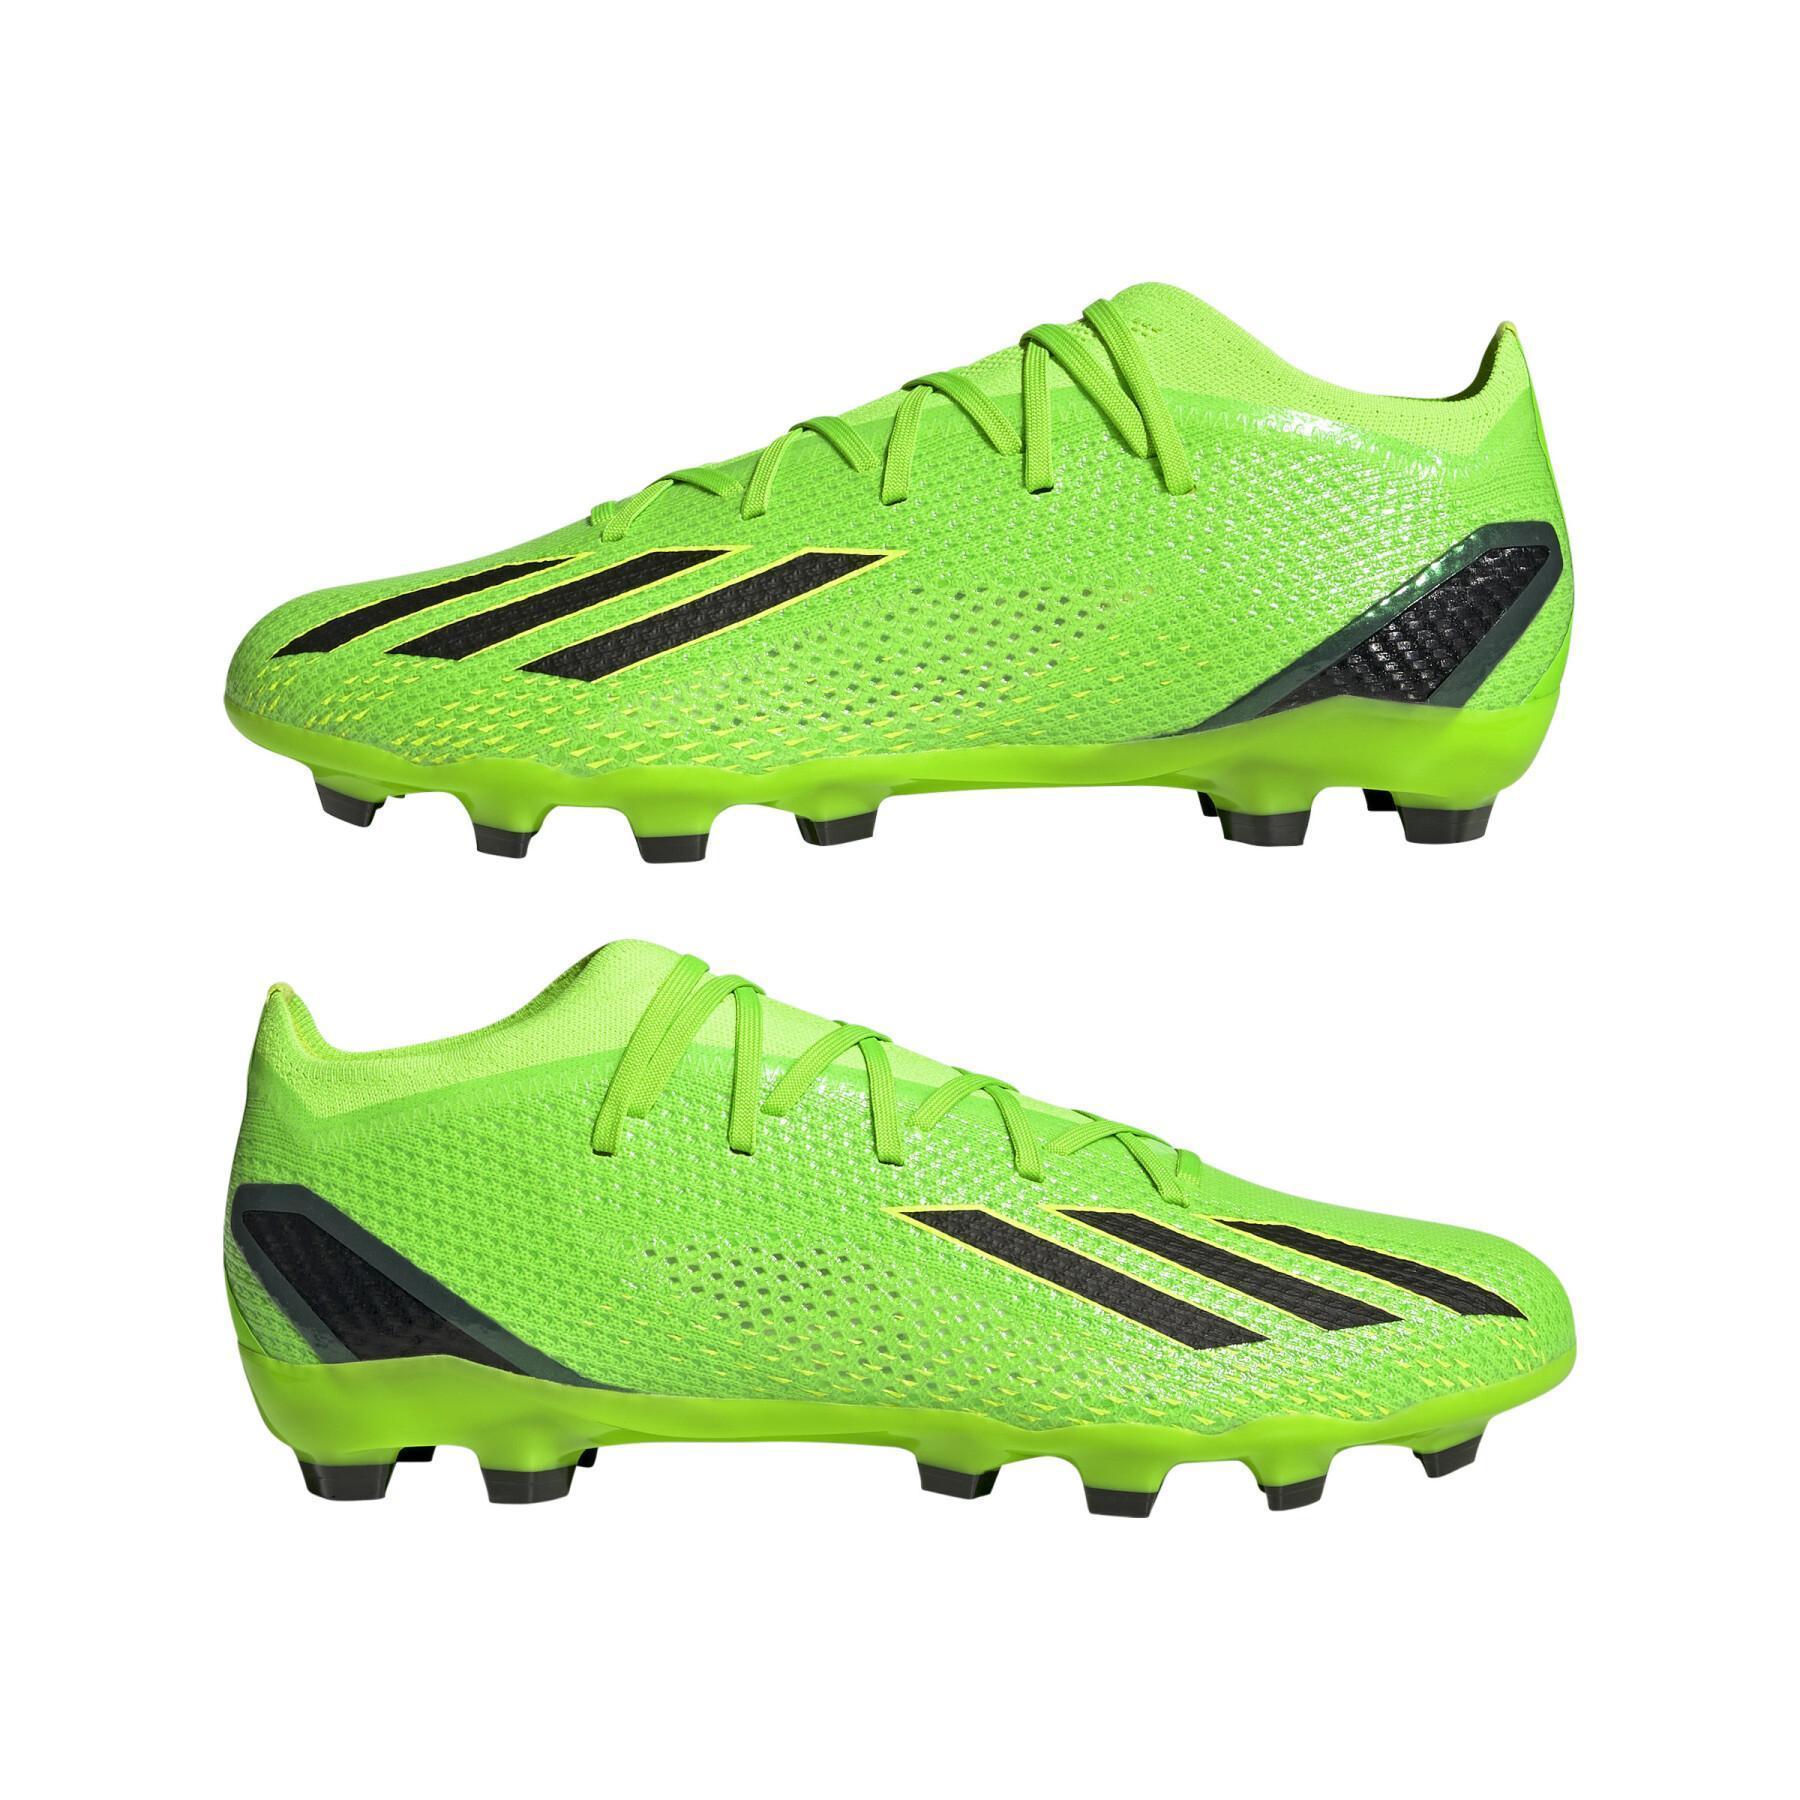 Sapatos de futebol adidas X Speedportal.2 MG - Game Data Pack